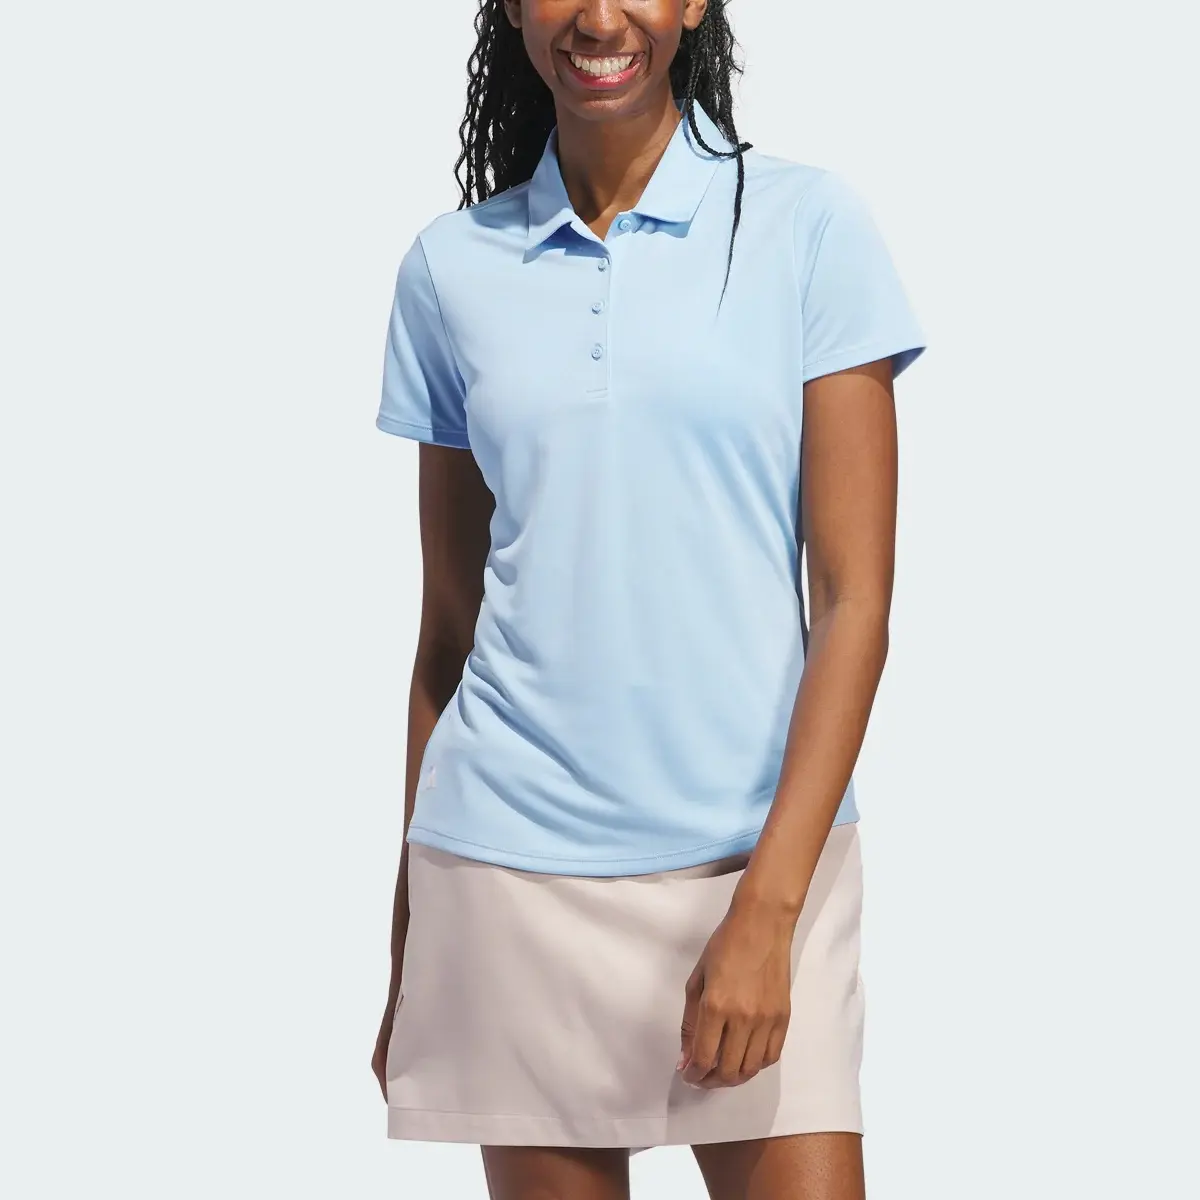 Adidas Women's Solid Performance Short Sleeve Polo Shirt. 1